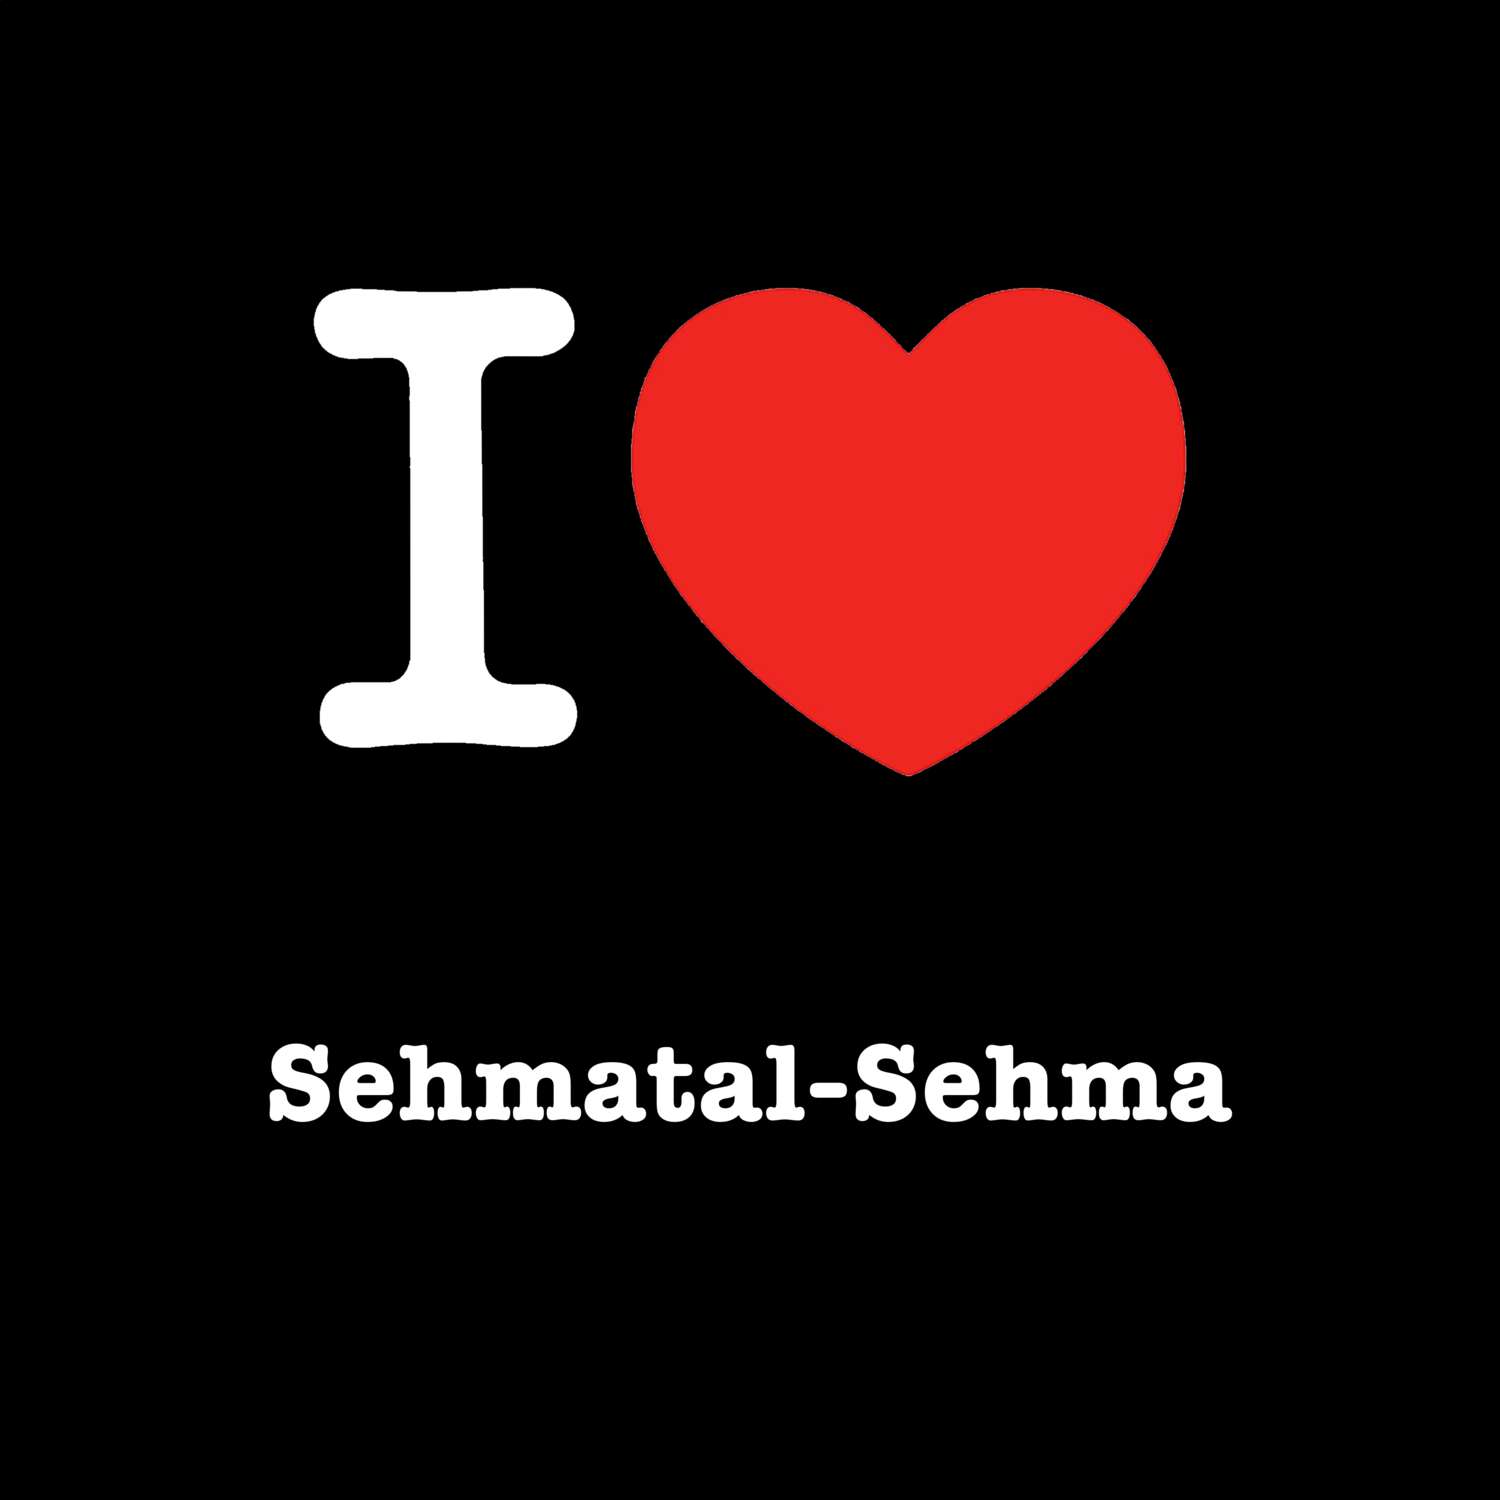 Sehmatal-Sehma T-Shirt »I love«